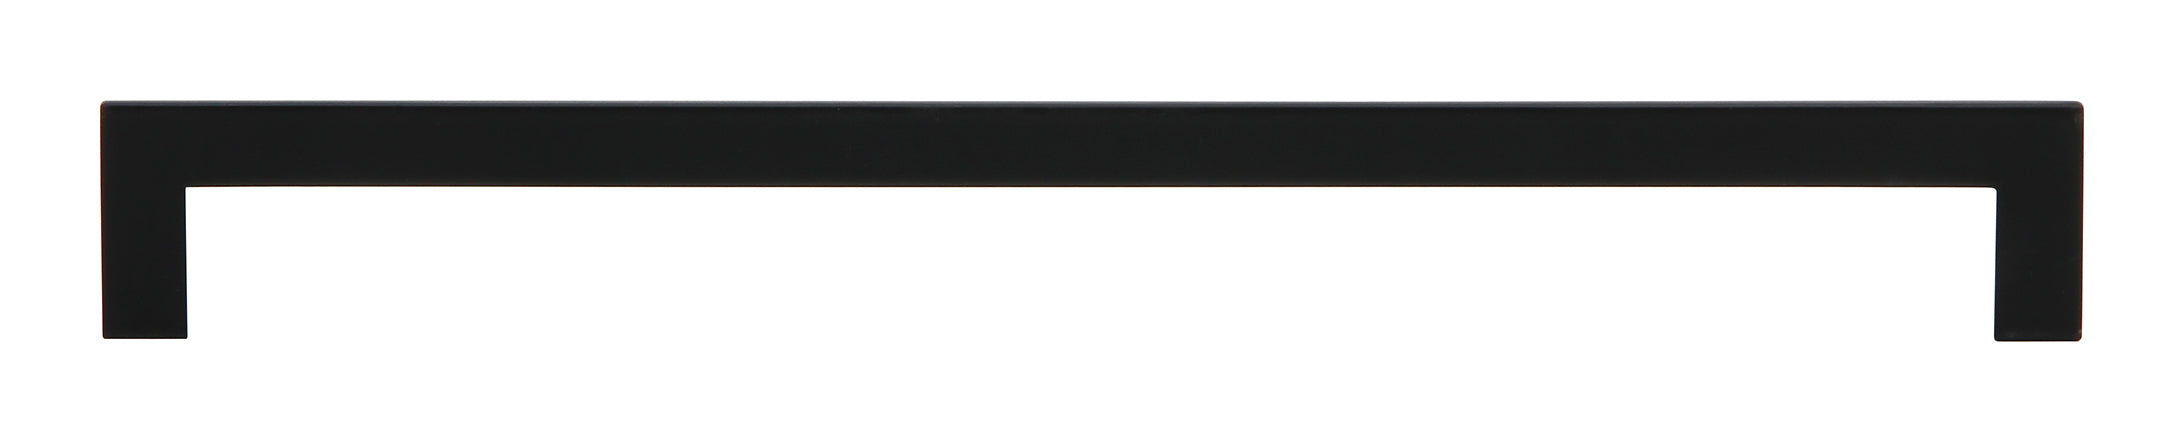 Silverline A2060 Aluminum Square Bar Pull Handle in Matte Black Finish